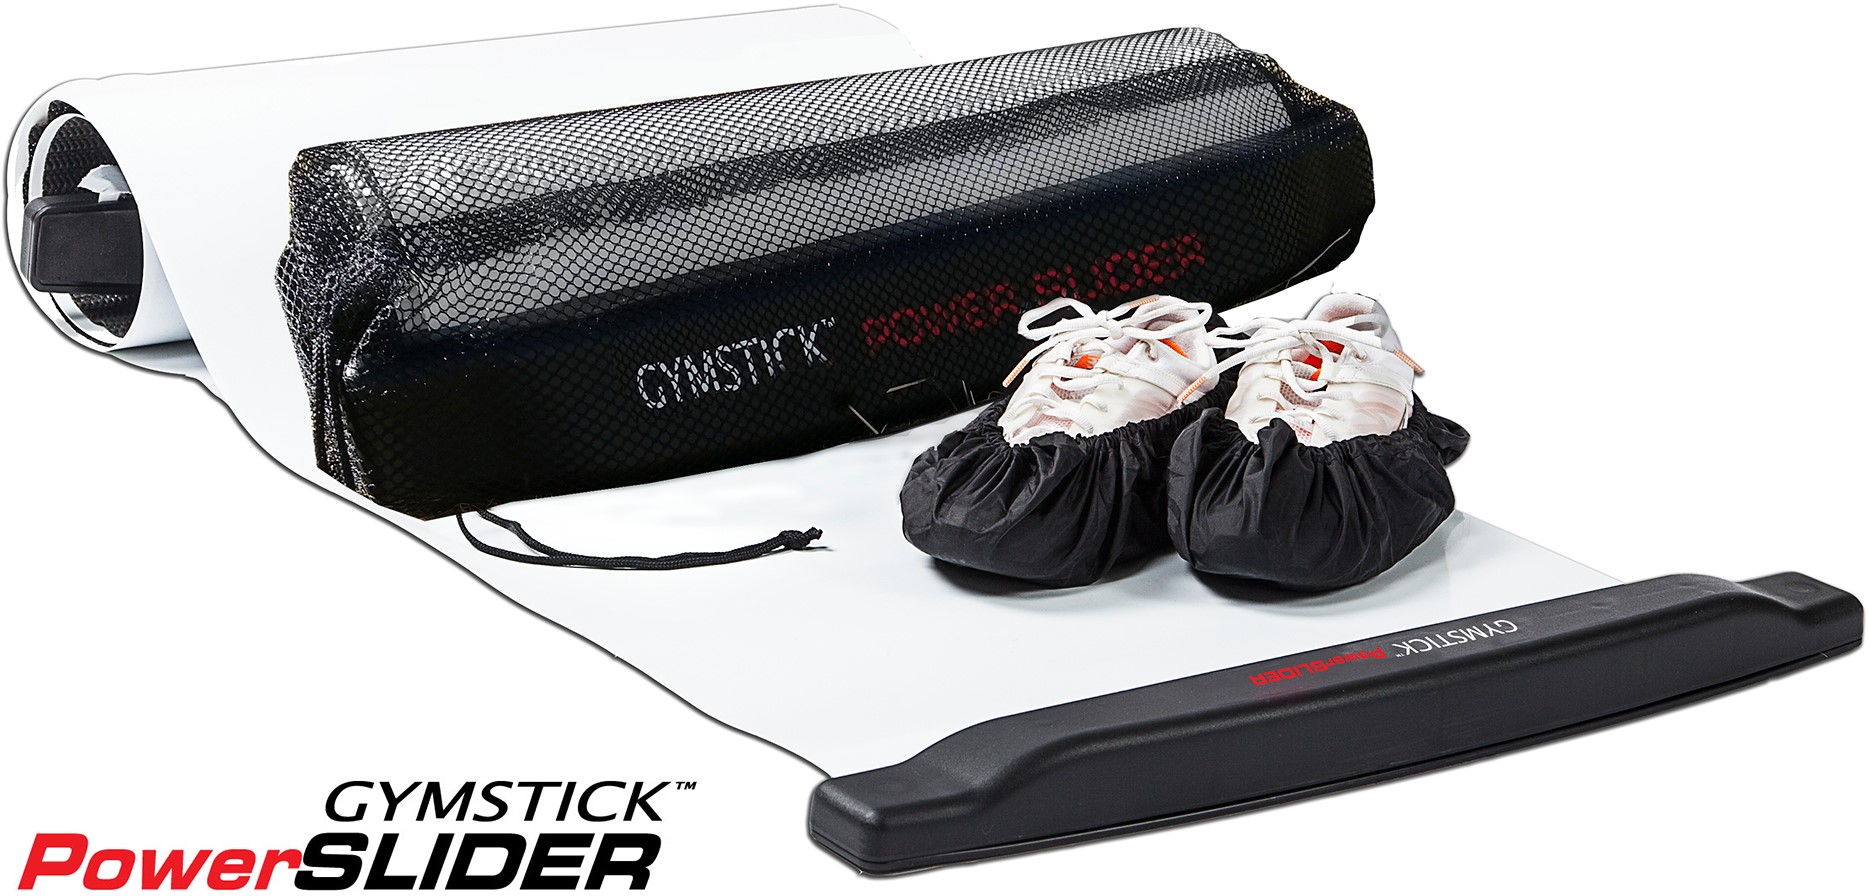 Gymstick Powerslider Slide Board buy at